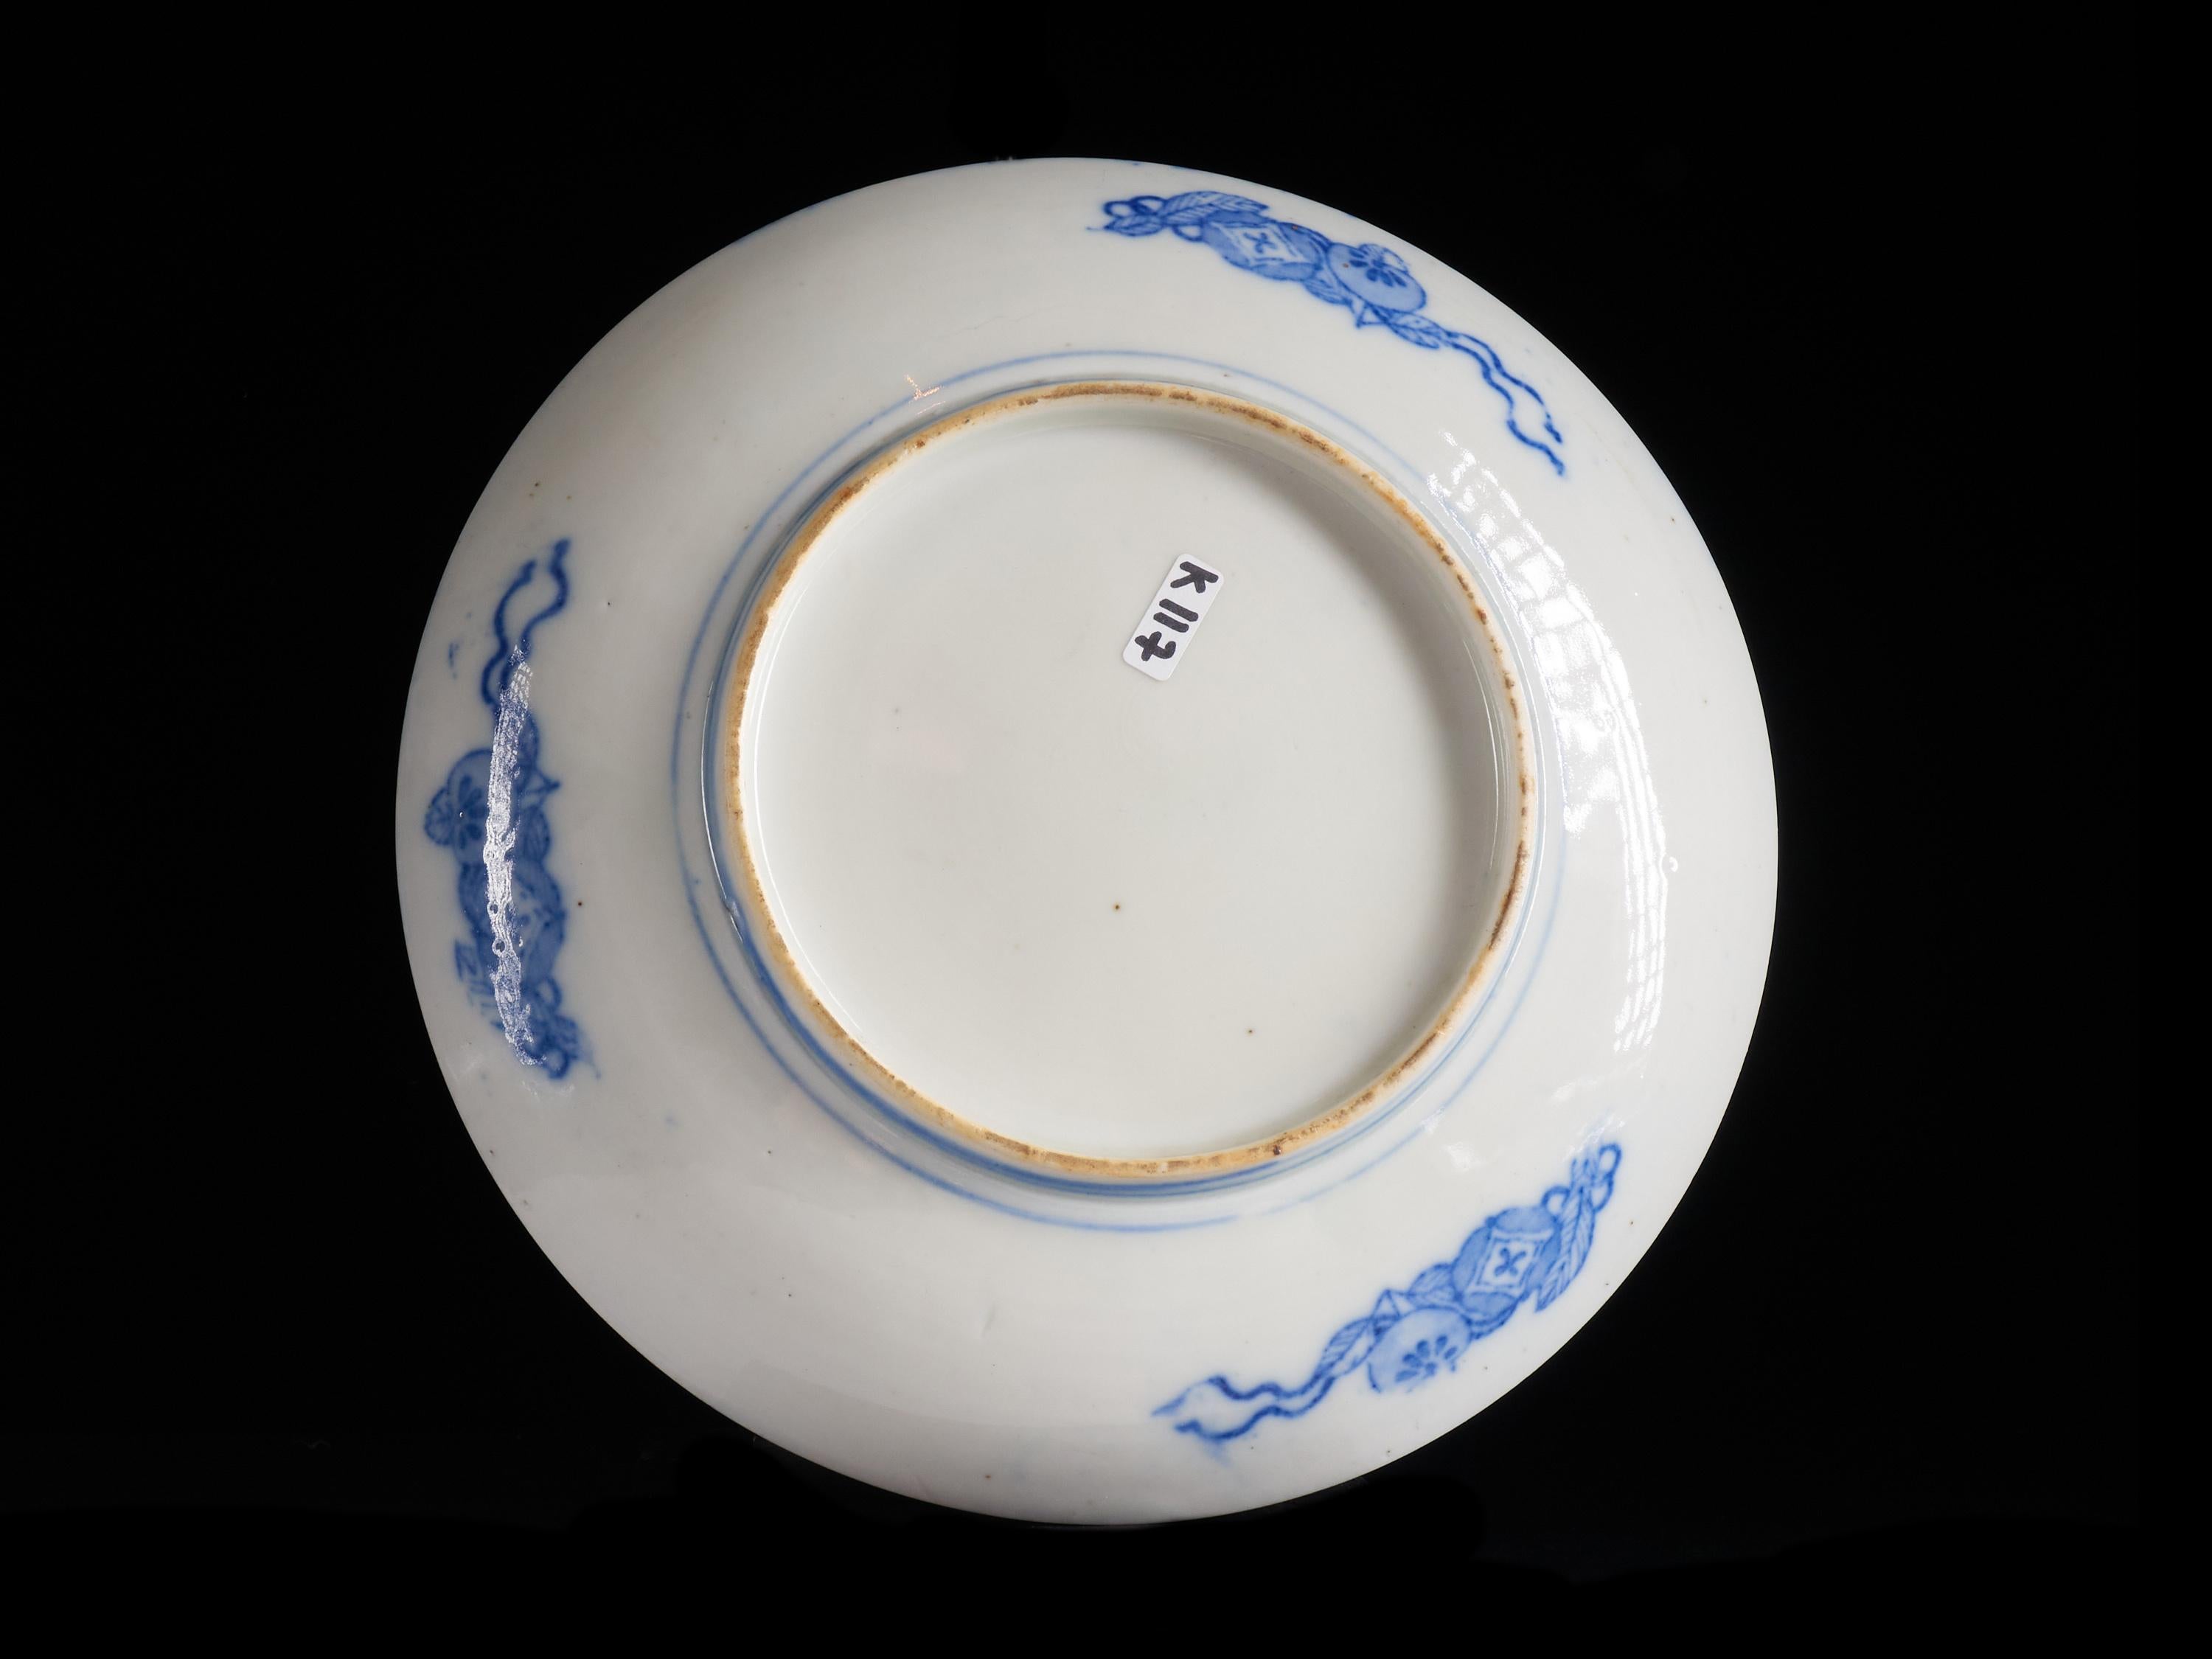 Stunning Set of 3 White Ceramic Plates with Ornate Indigo Blue Designs 3